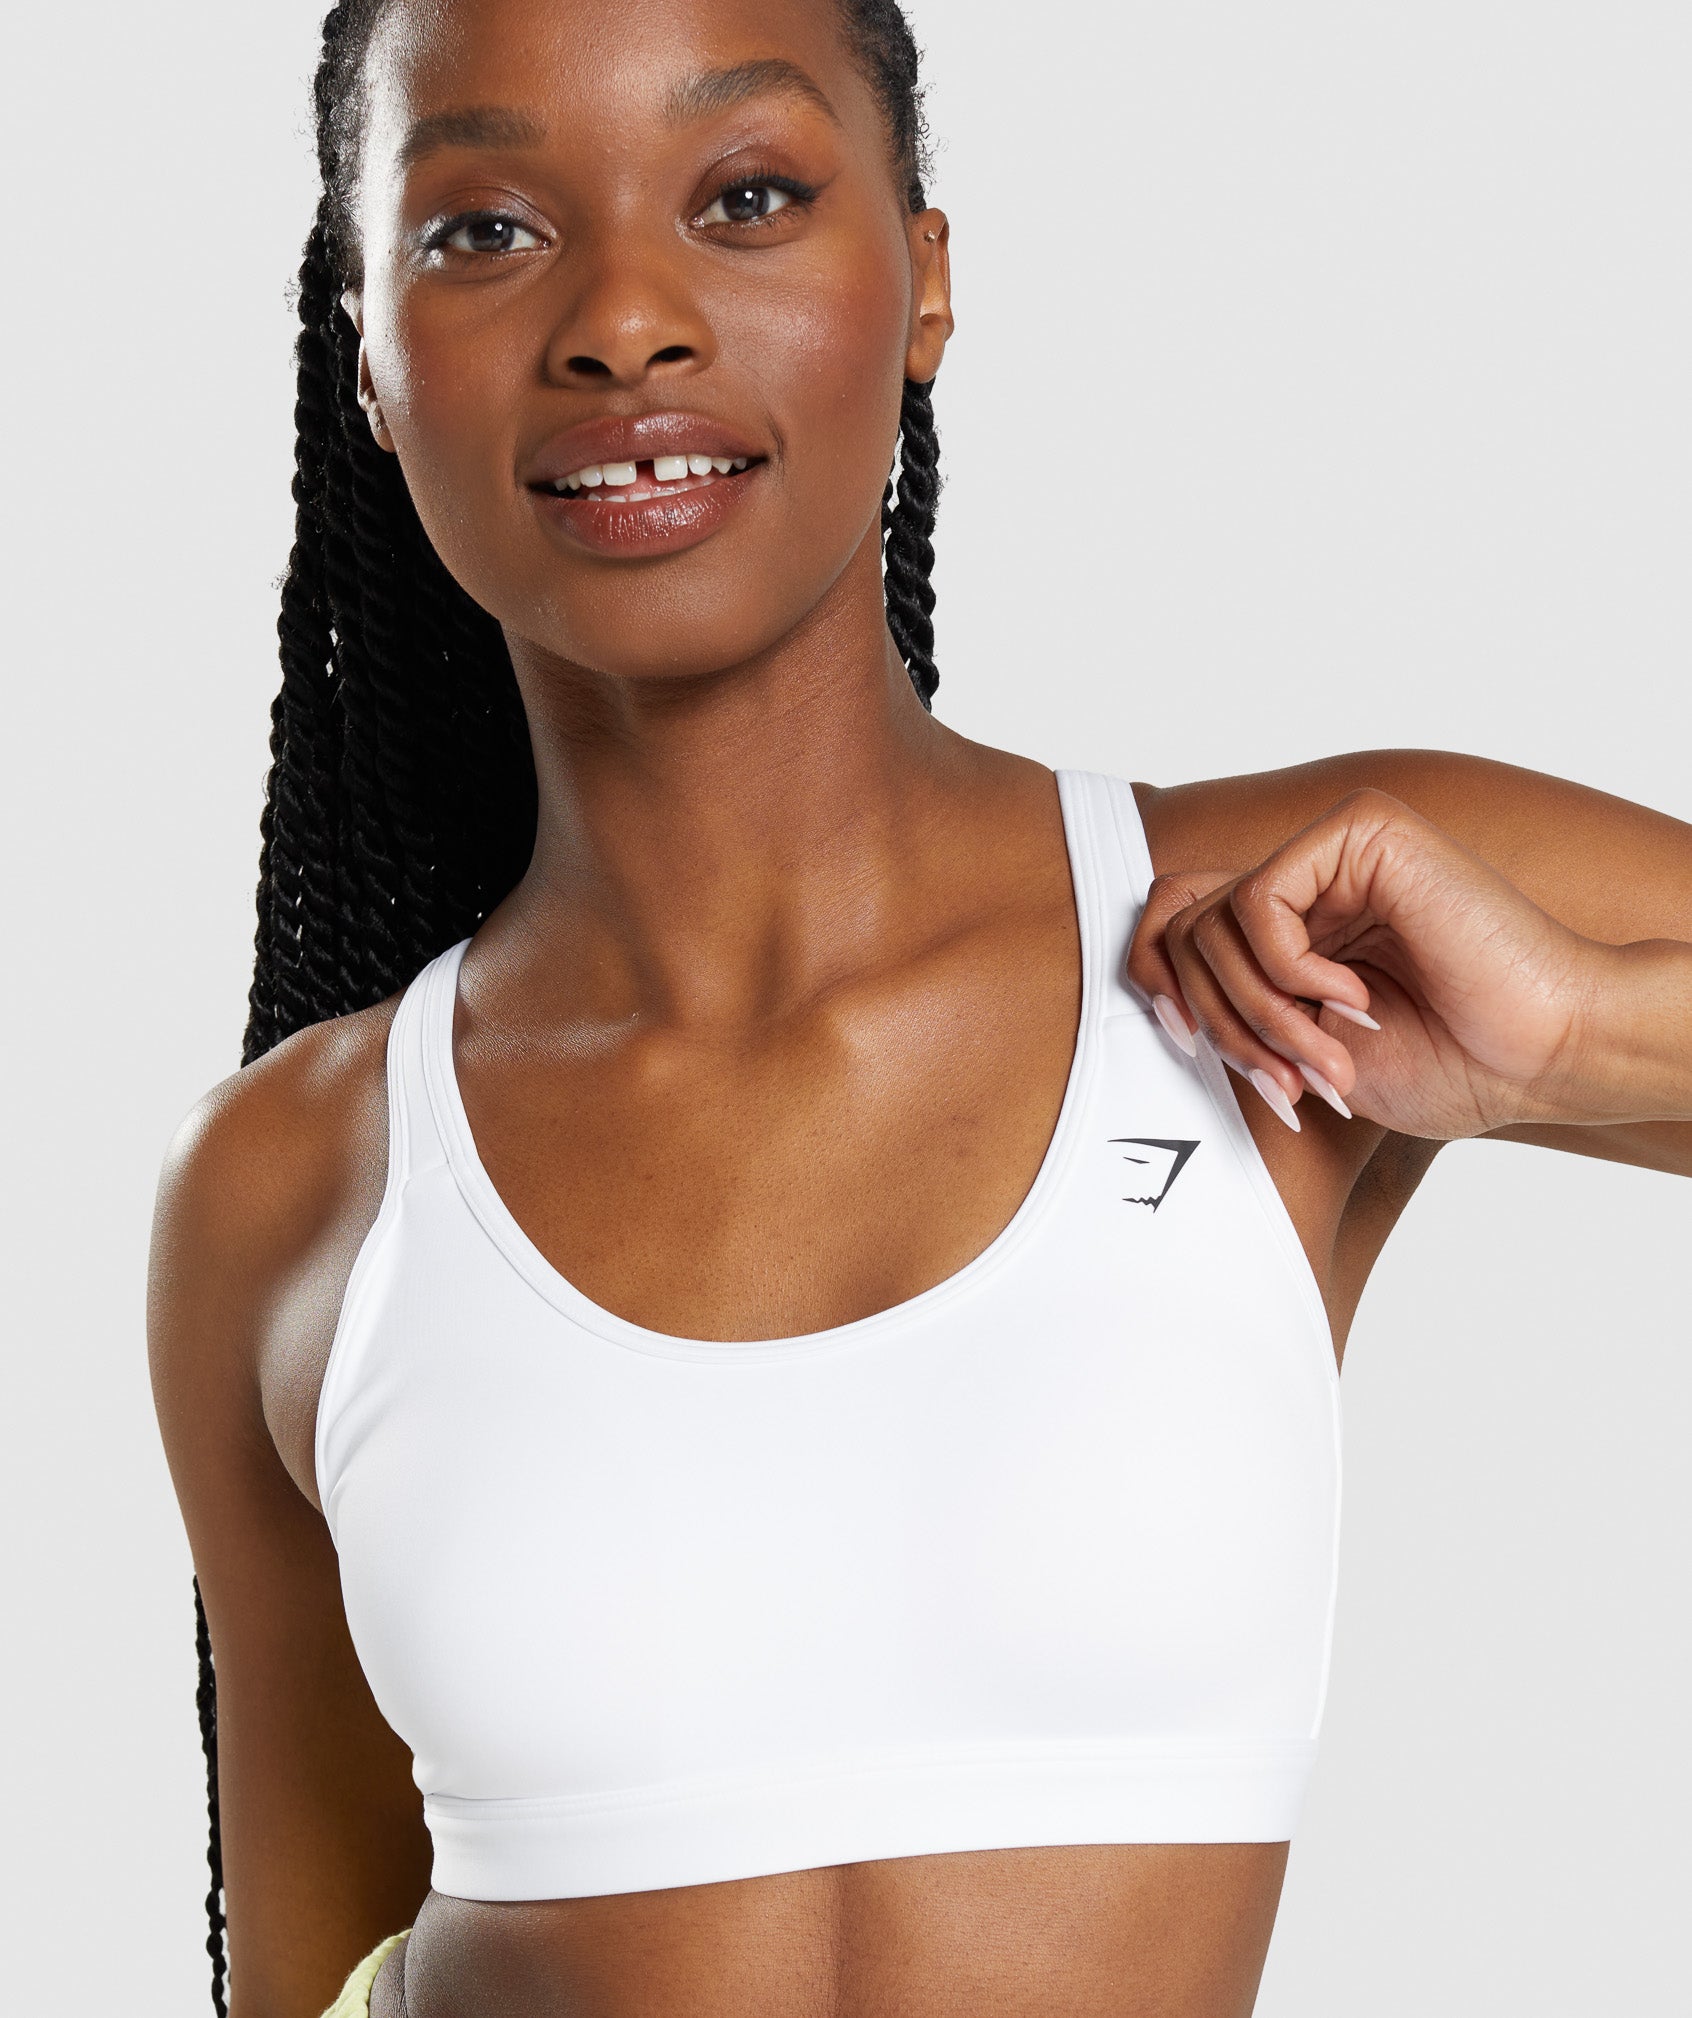 TERODACO Padded Sports Bra Women High Support Open Back Gym Crop Top Bra  for Women Yoga Bra Tops Workout Tank Tops Women Running Bra,Wireless Sweat